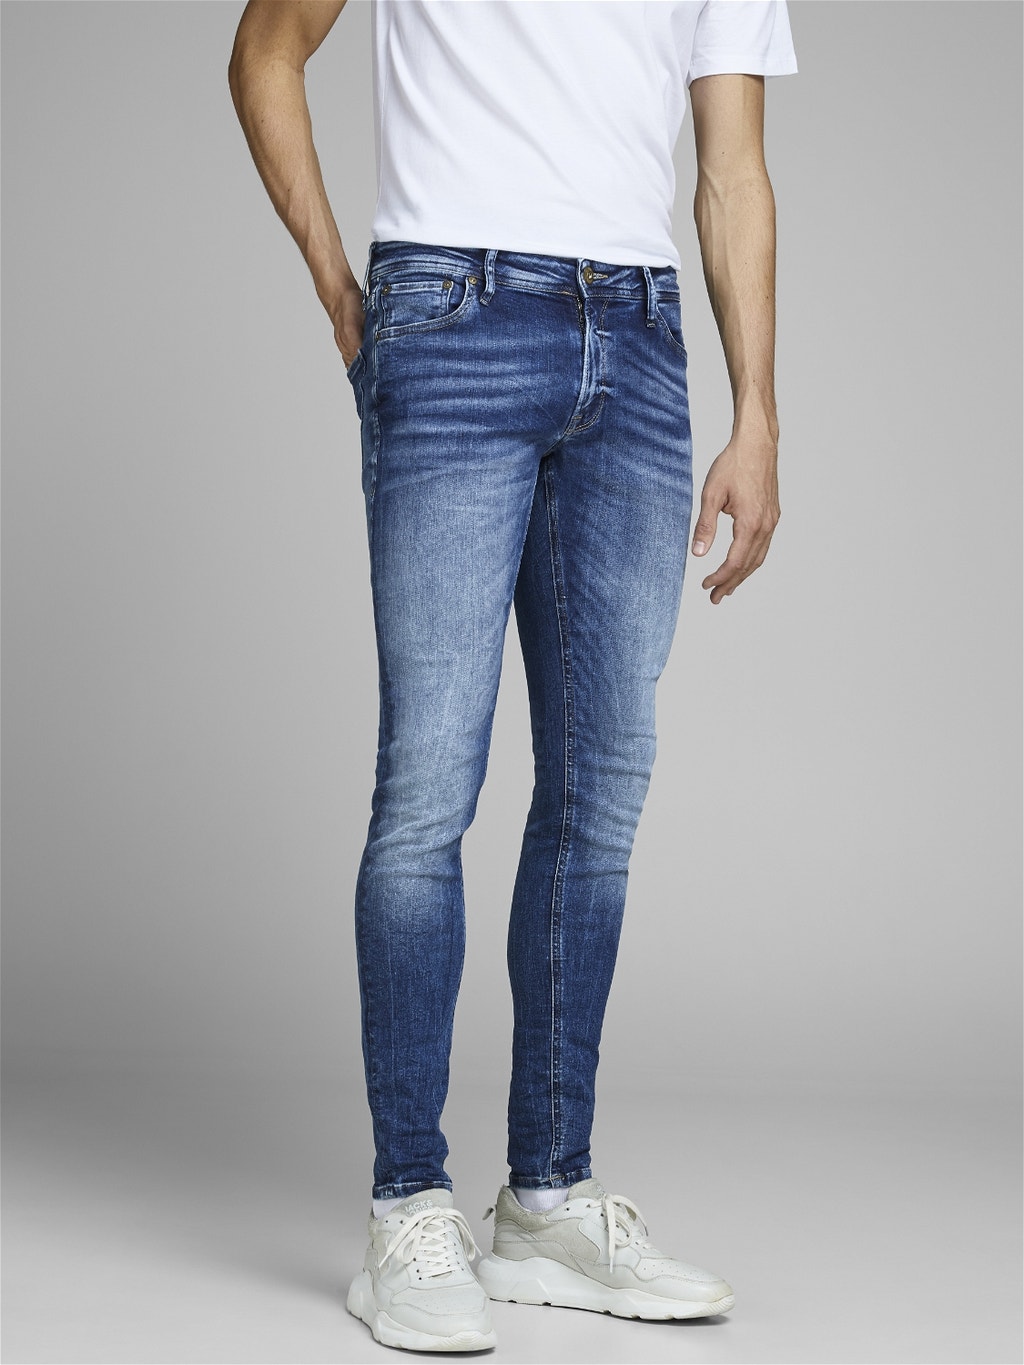 Zin Geduld krassen Spray on fit Low rise Jeans | Medium Blue | Jack & Jones®